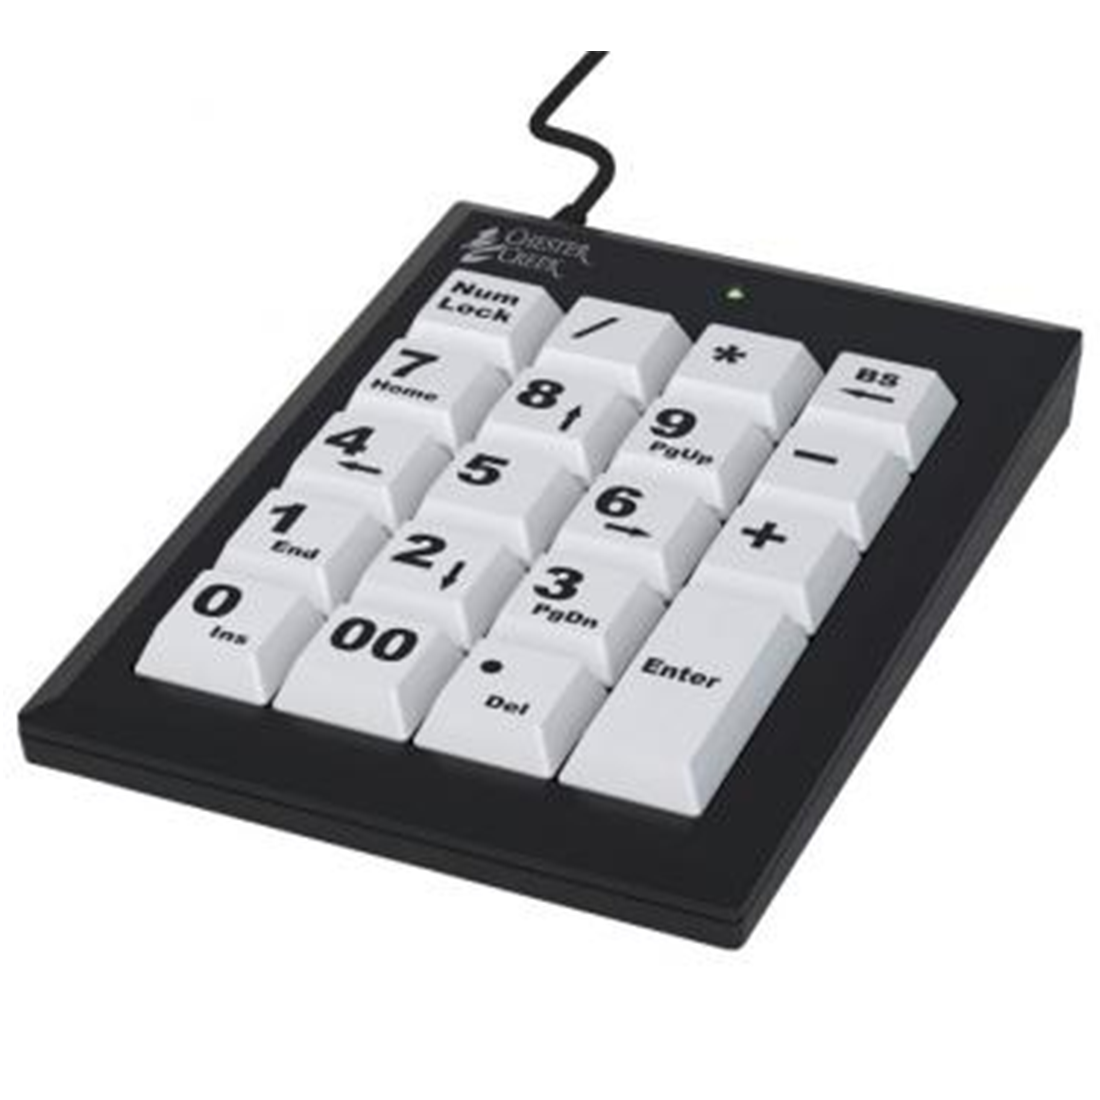 numeric keyboard